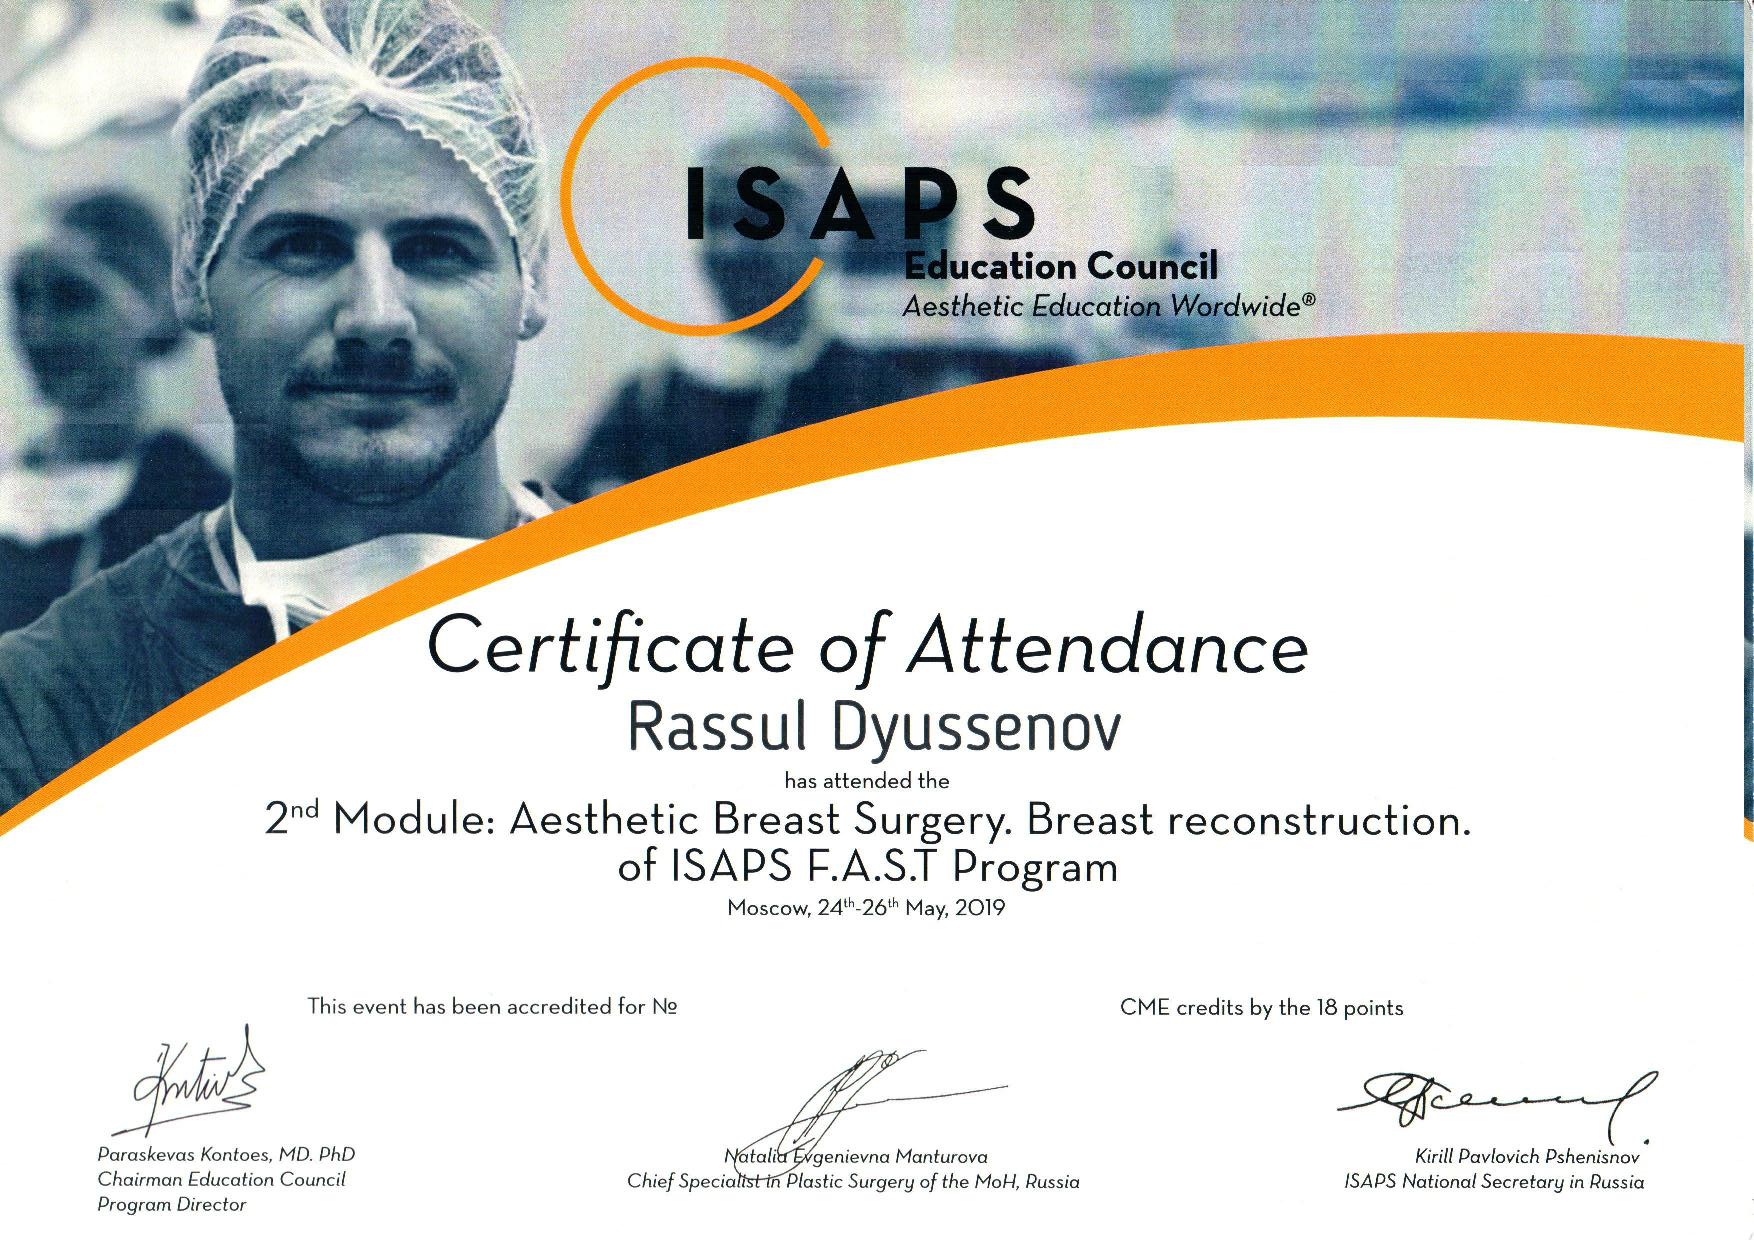 Расул Дюсенов certificate of attendance